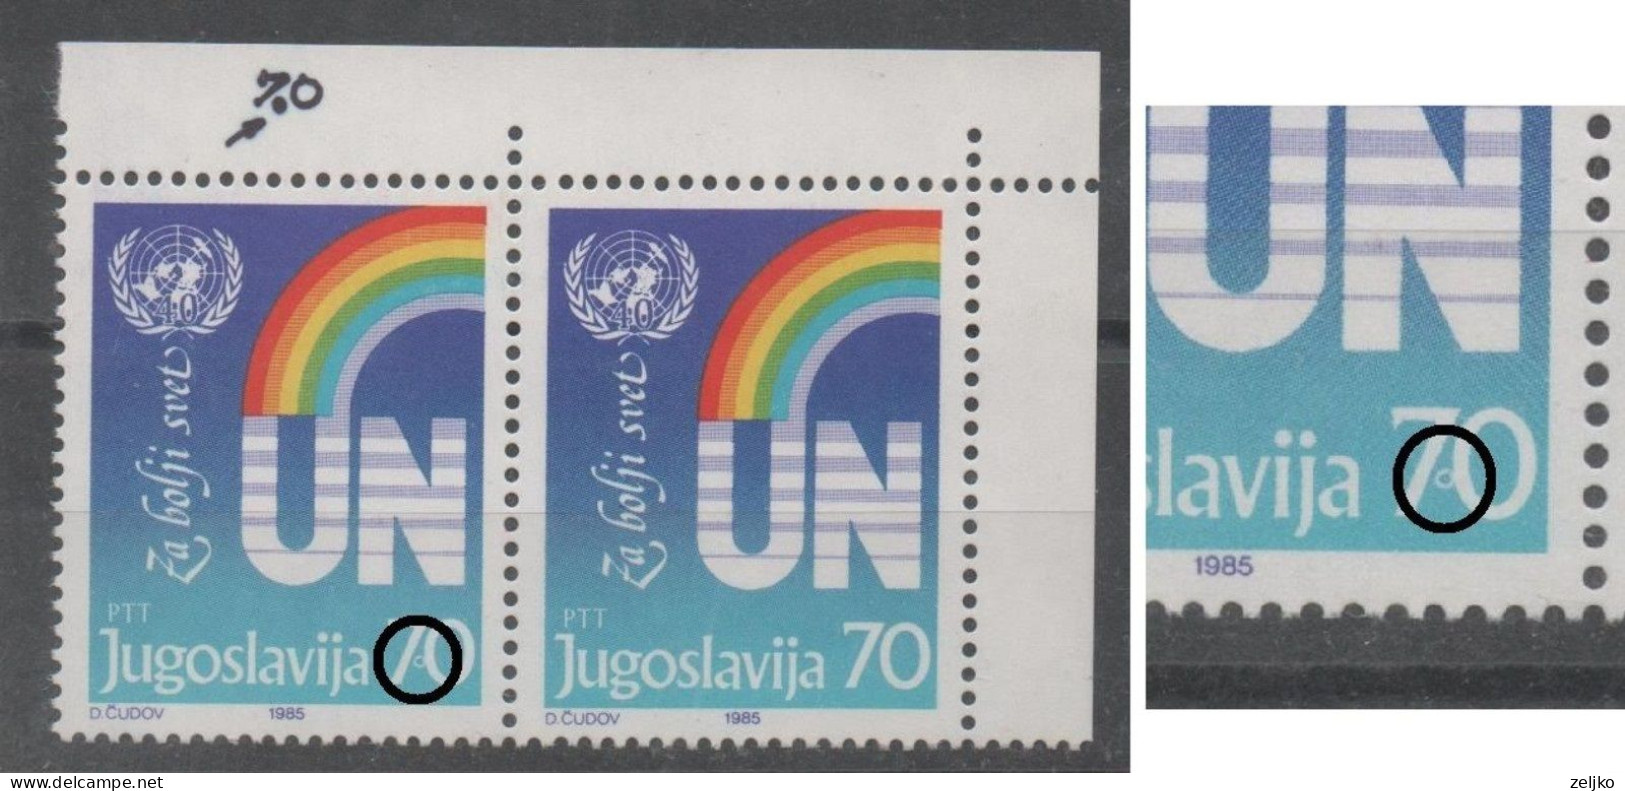 Yugoslavia, Error, MNH, Michel 2112, 1985, UN, Circle In The Face Value - Non Dentelés, épreuves & Variétés